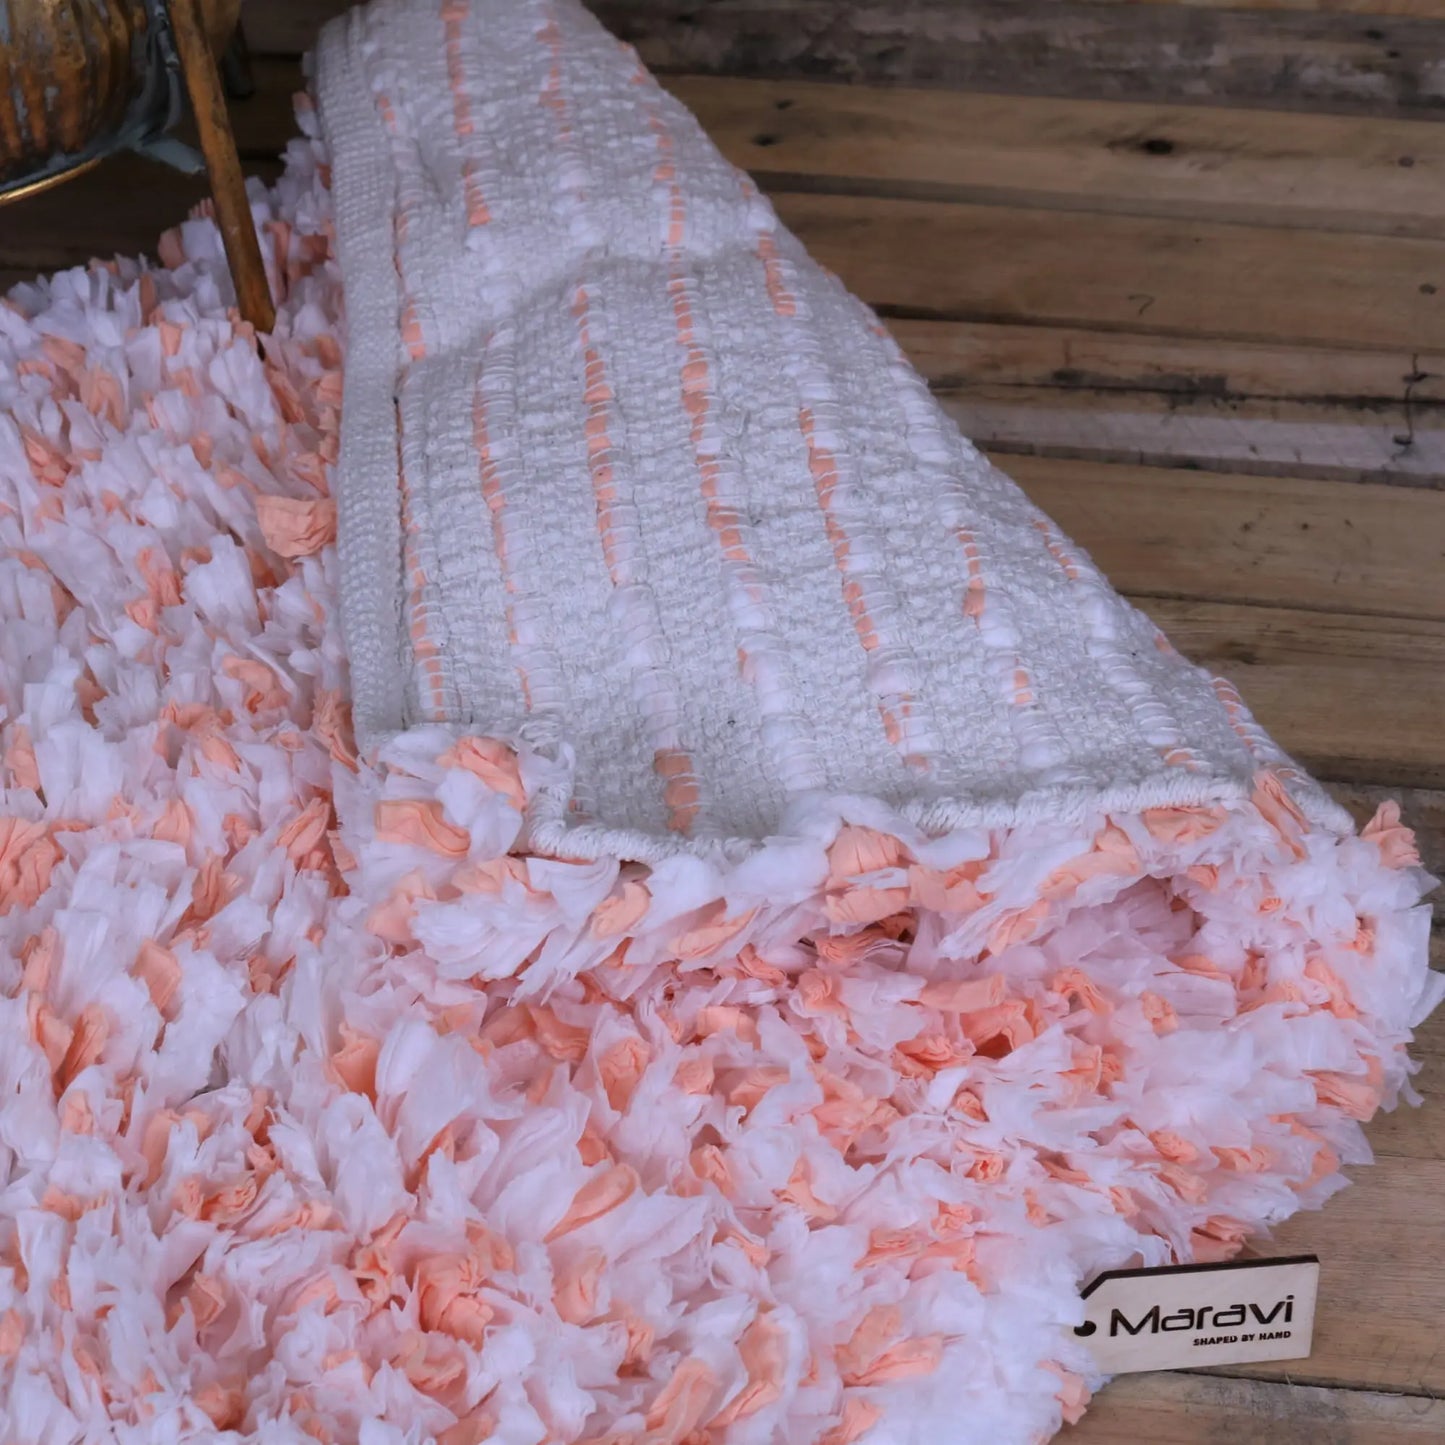 Varam Fluffy Recycled Rug White and Orange - Showing Underside